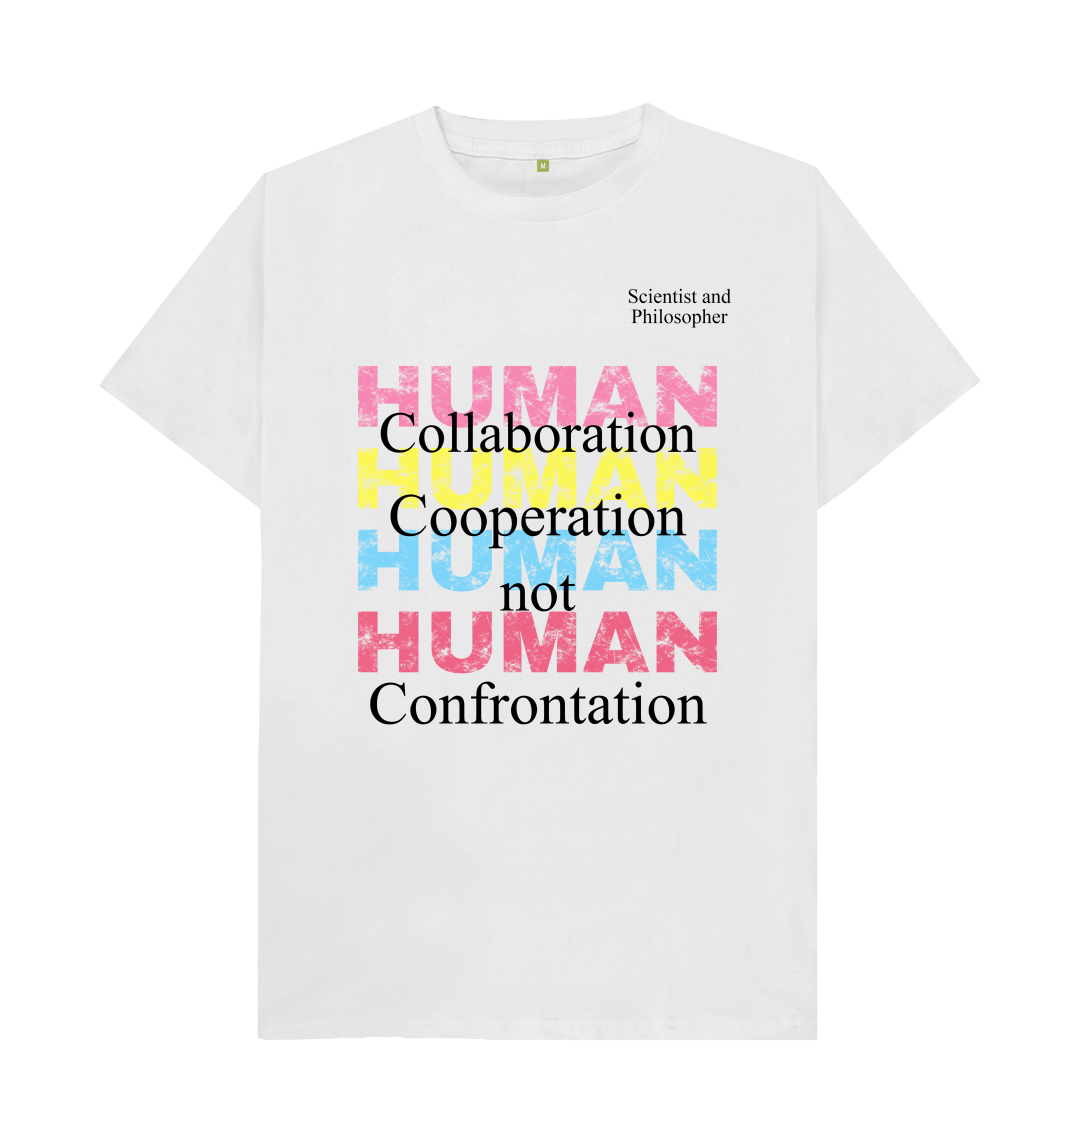 Human collaboration cooperation not confrontation – organic cotton T-shirt